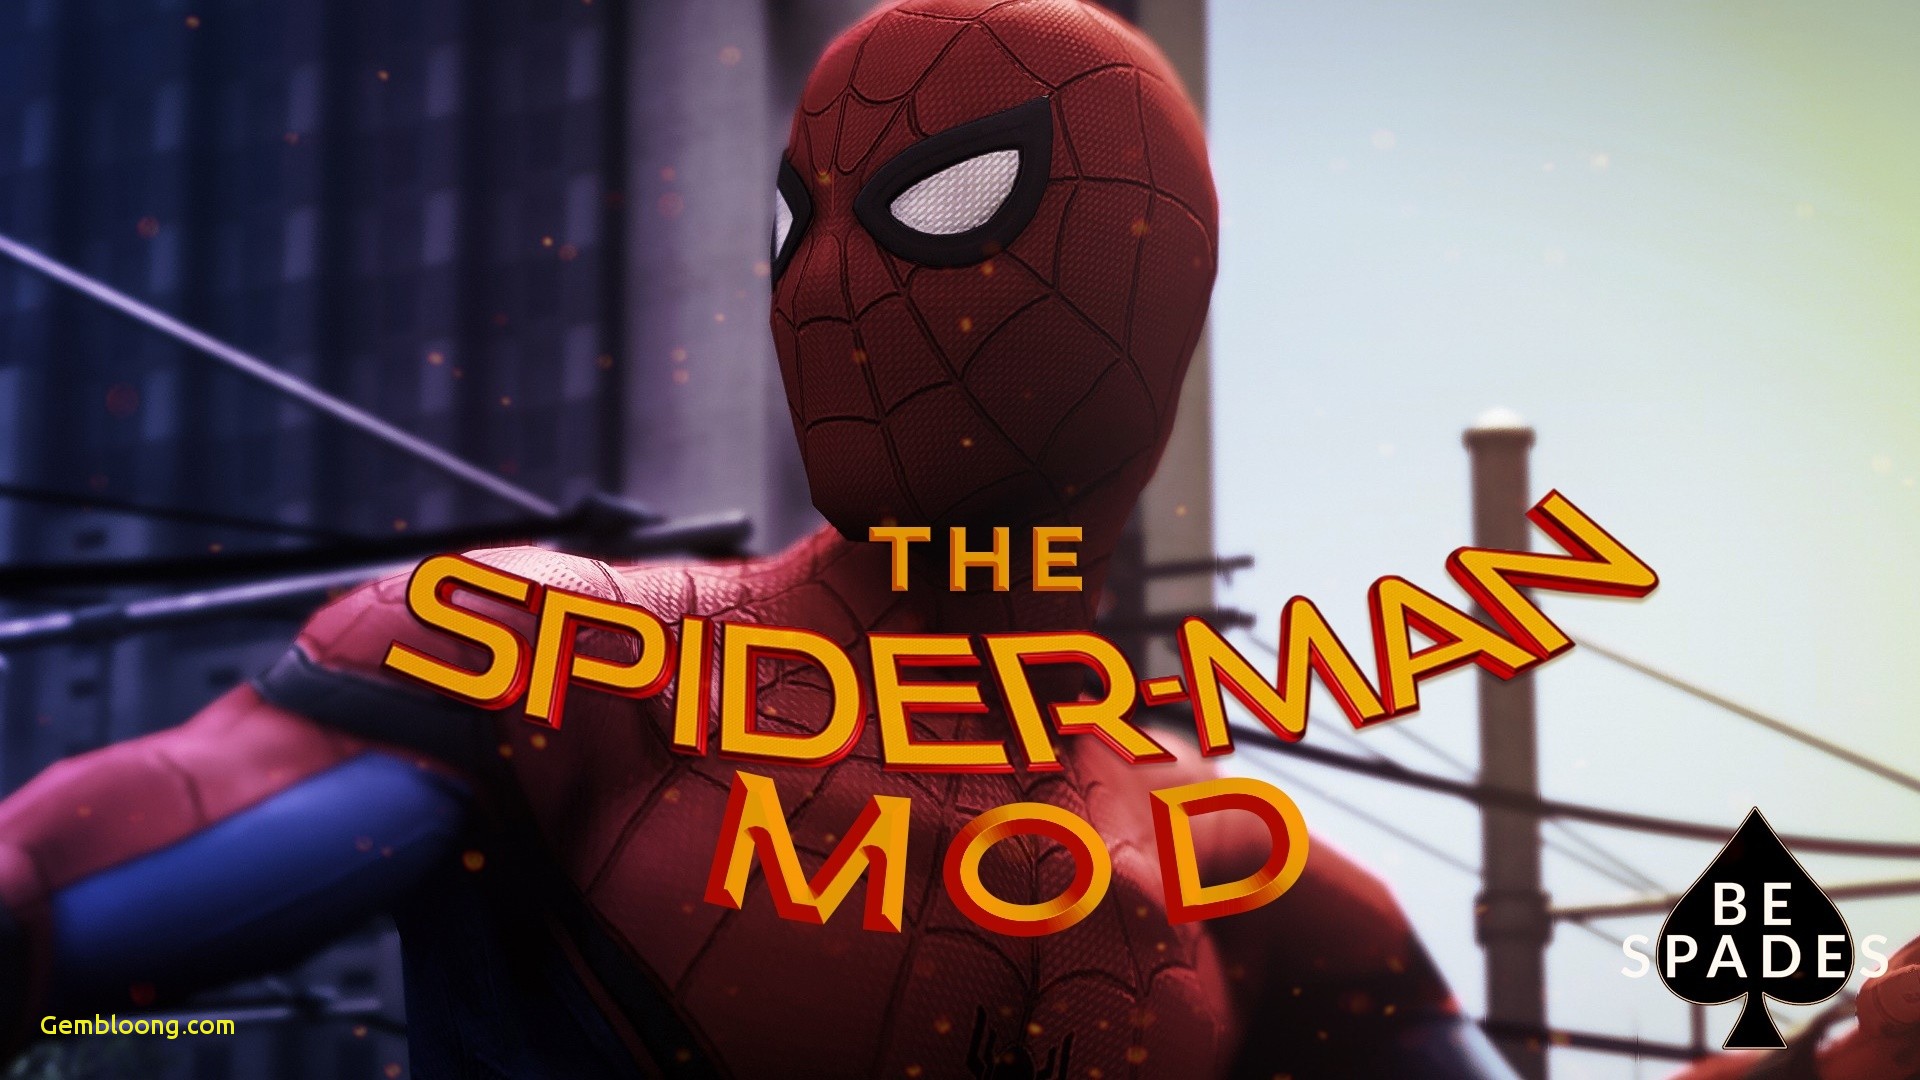 spiderman live wallpaper,superhero,fictional character,pc game,hero,games